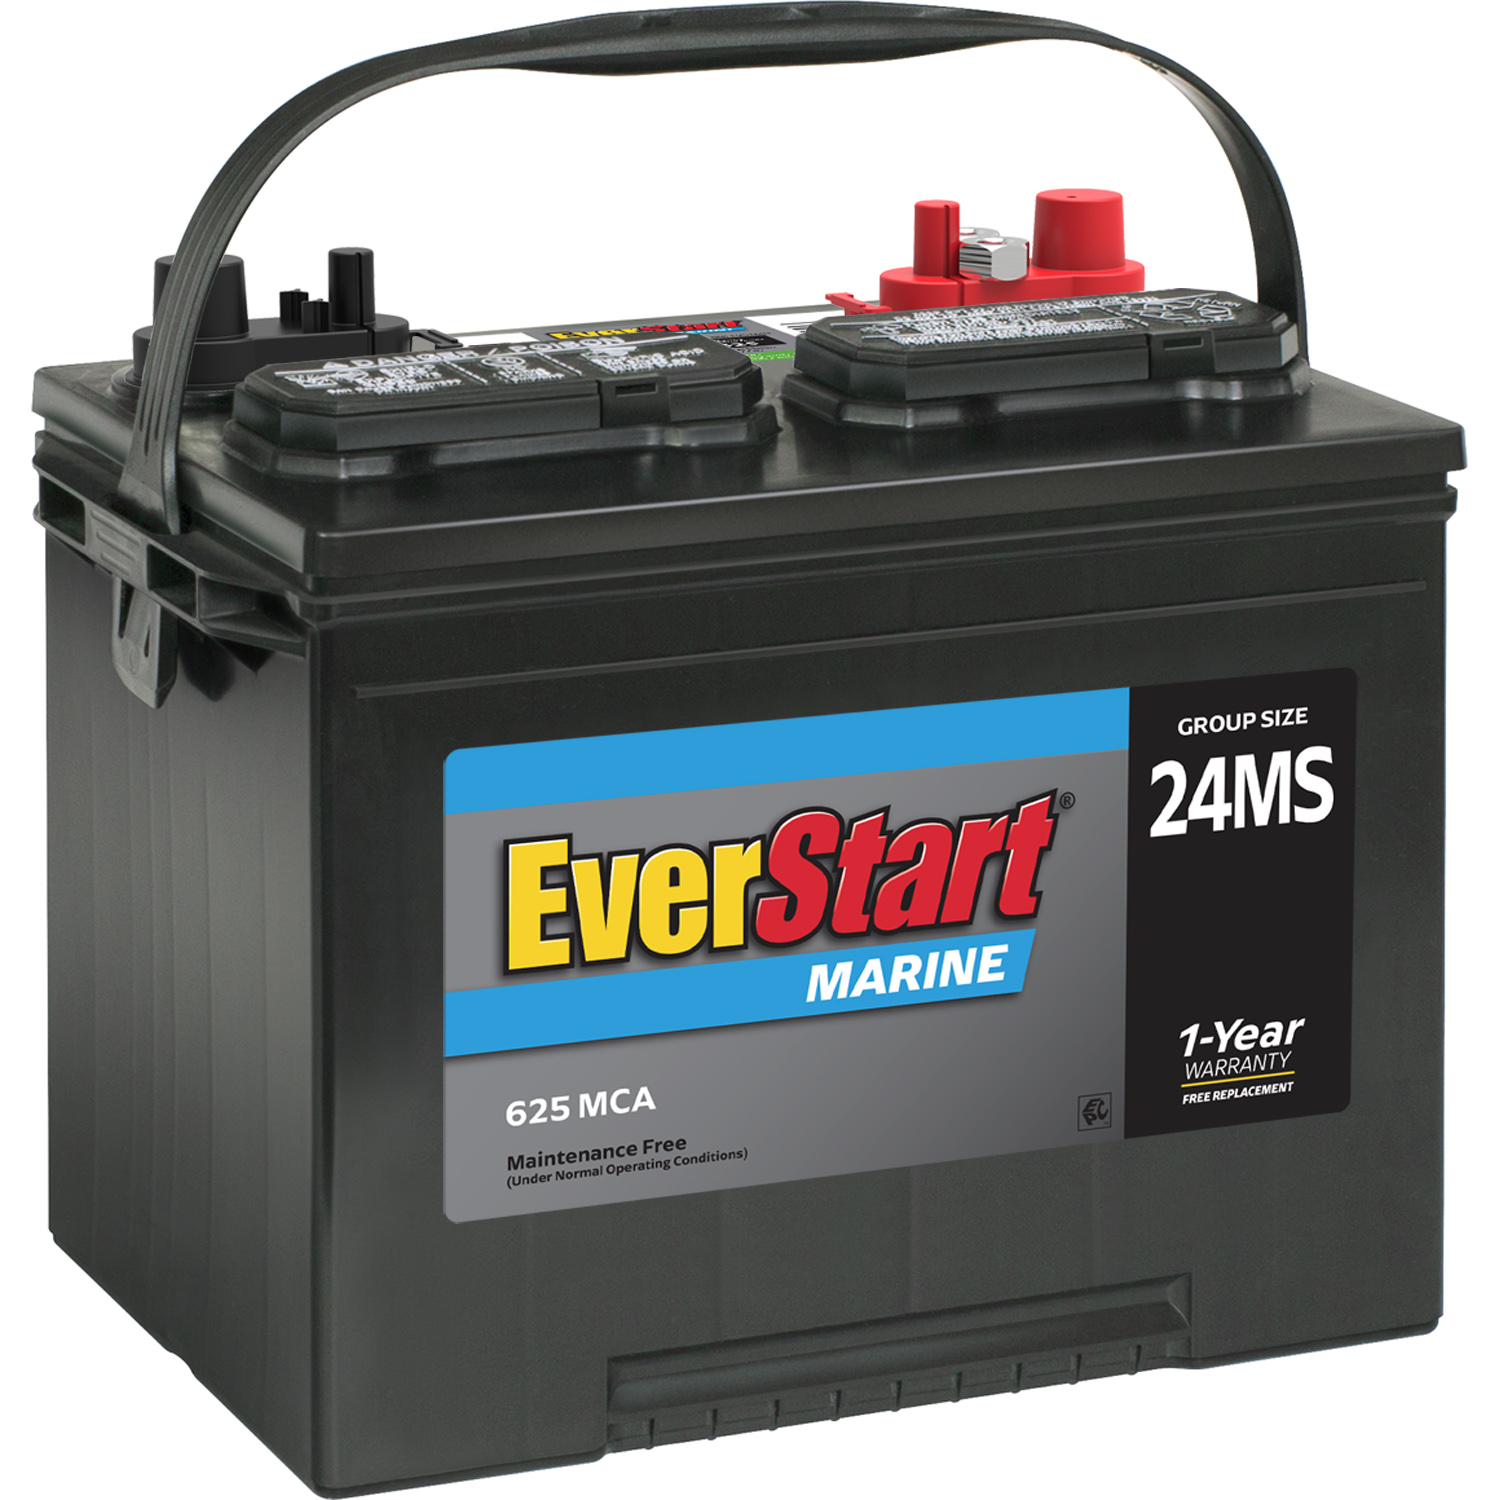 EverStart Lead Acid Marine Starting Battery, Group Size 24MS 12 Volt, 625 MCA - image 1 of 7